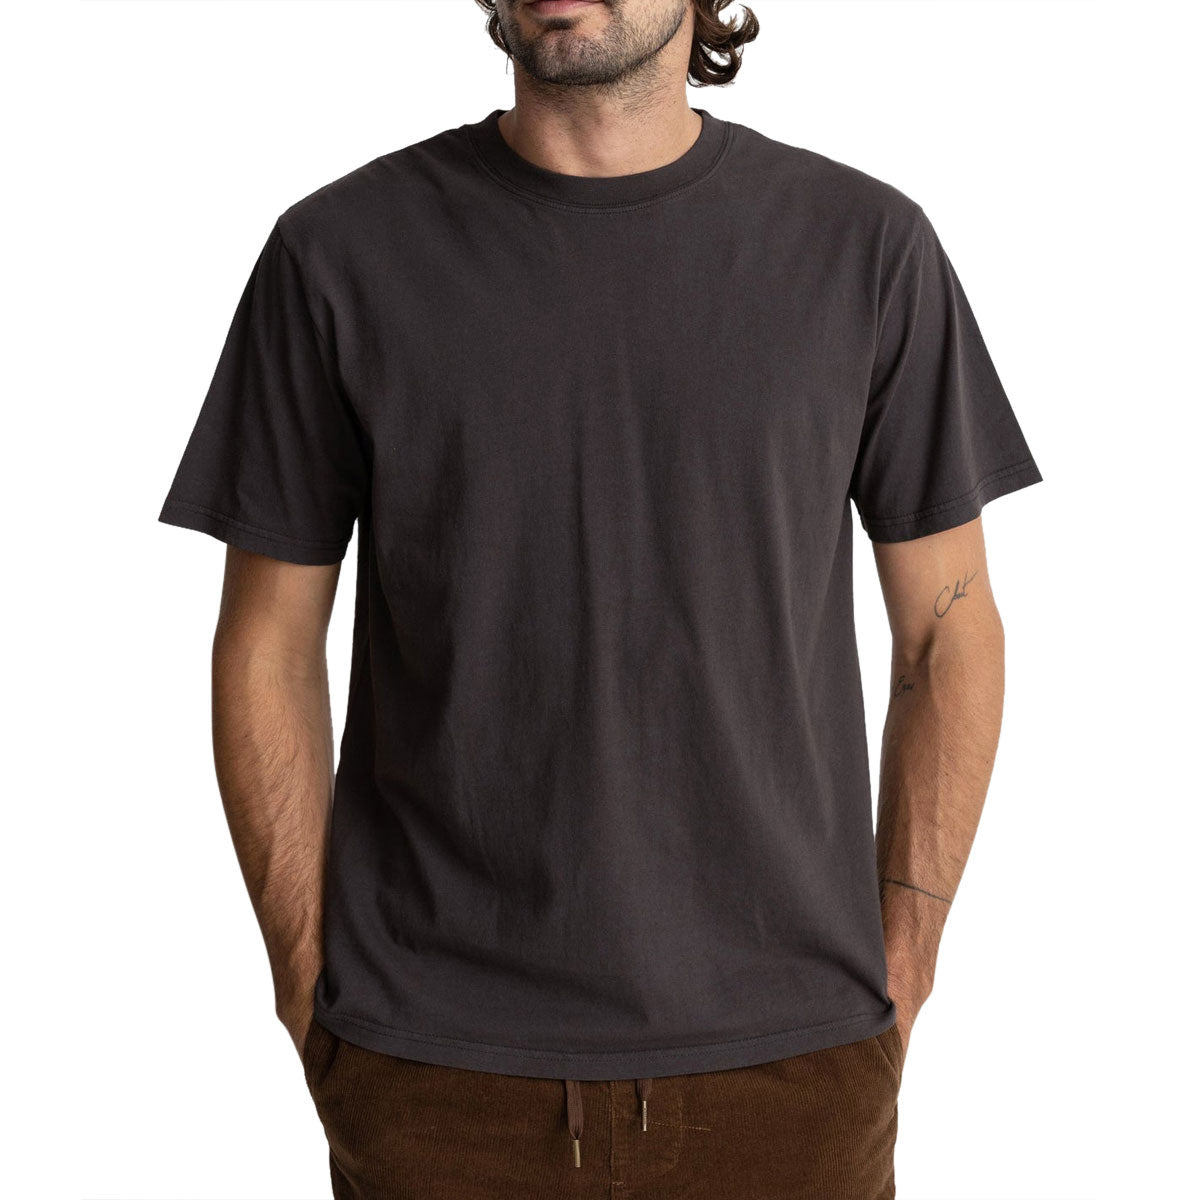 Rhythm Classic Brand T-Shirt - Vintage Black image 2